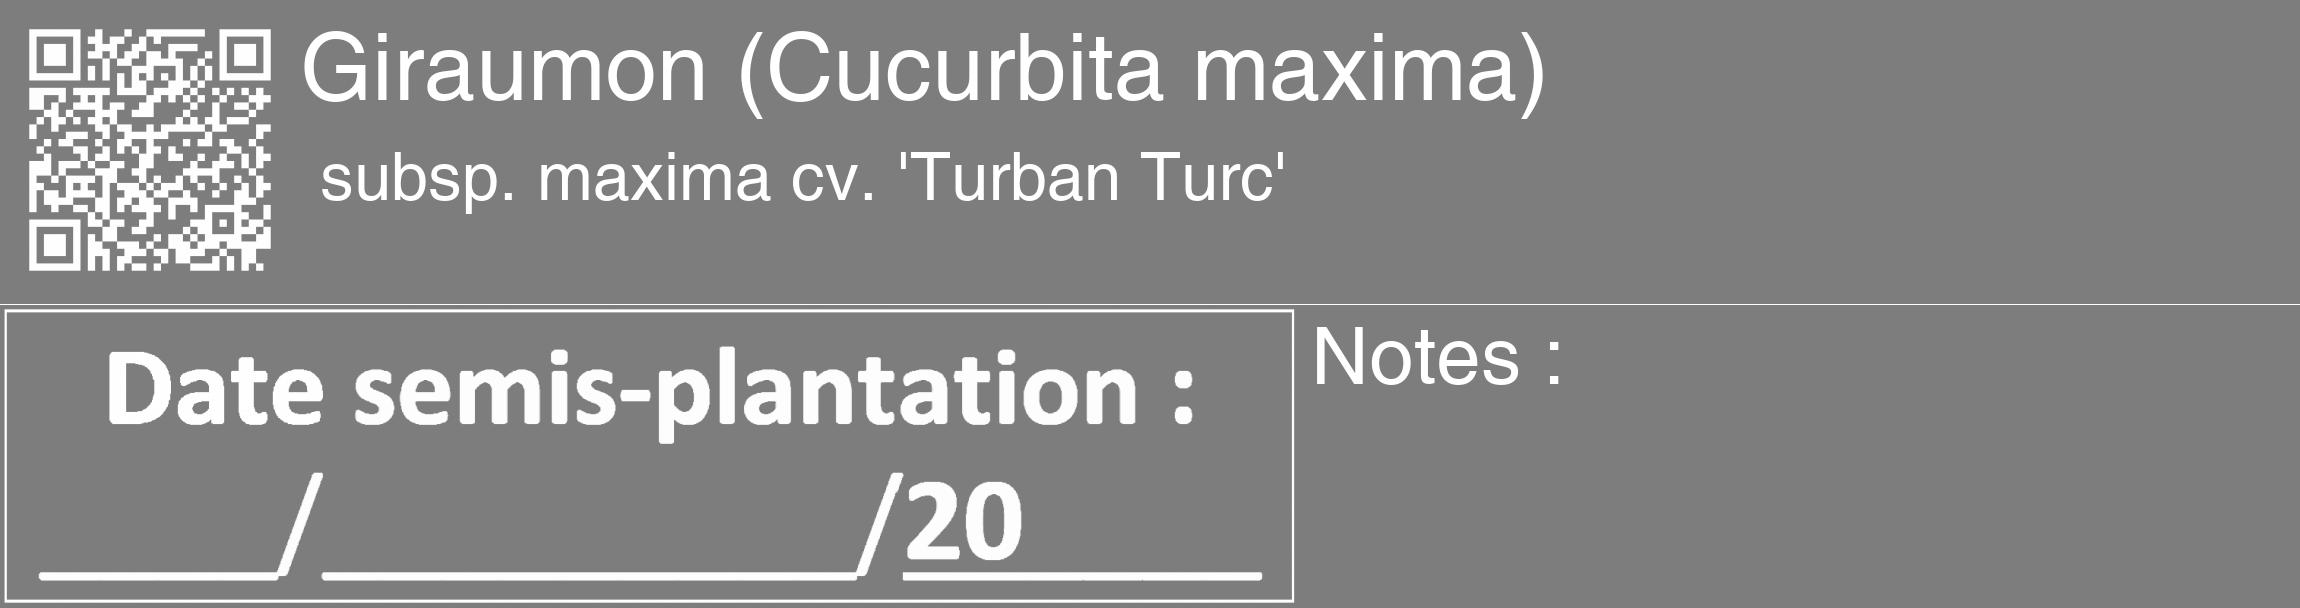 Étiquette de : Cucurbita maxima subsp. maxima cv. 'Turban Turc' - format c - style blanche35_basique_basiquehel avec qrcode et comestibilité